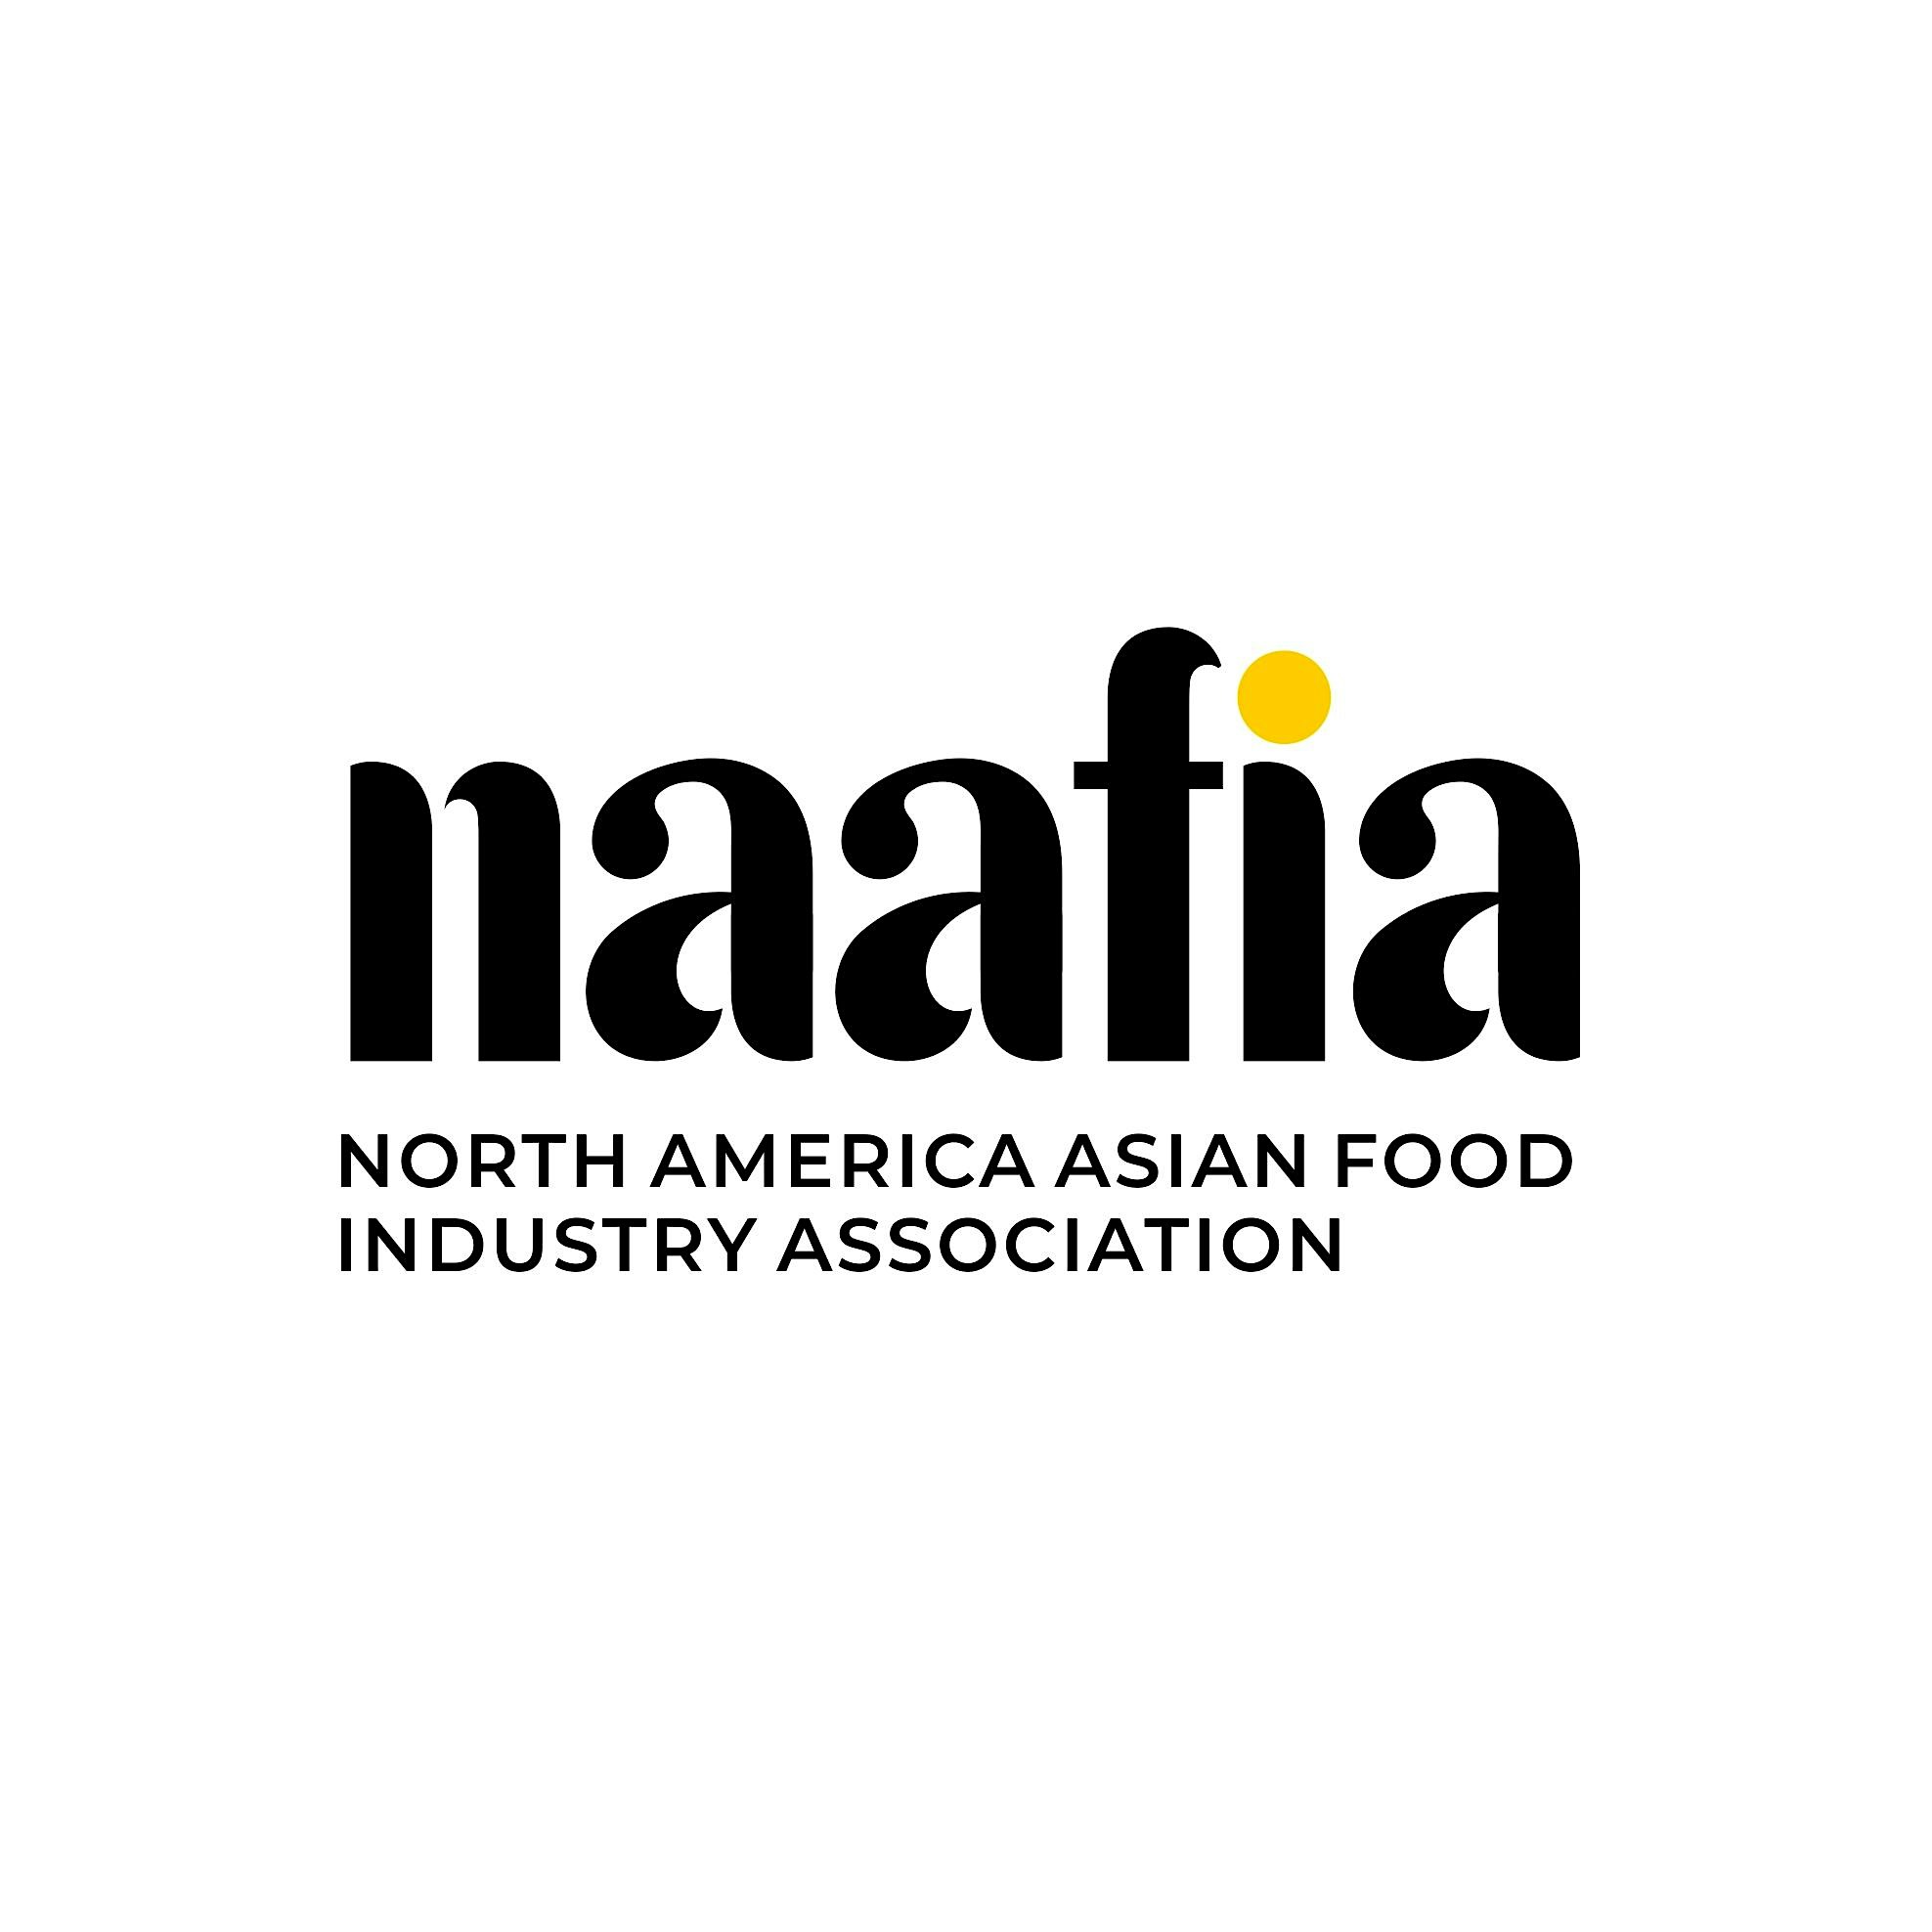 North America Asian Food Industry Association